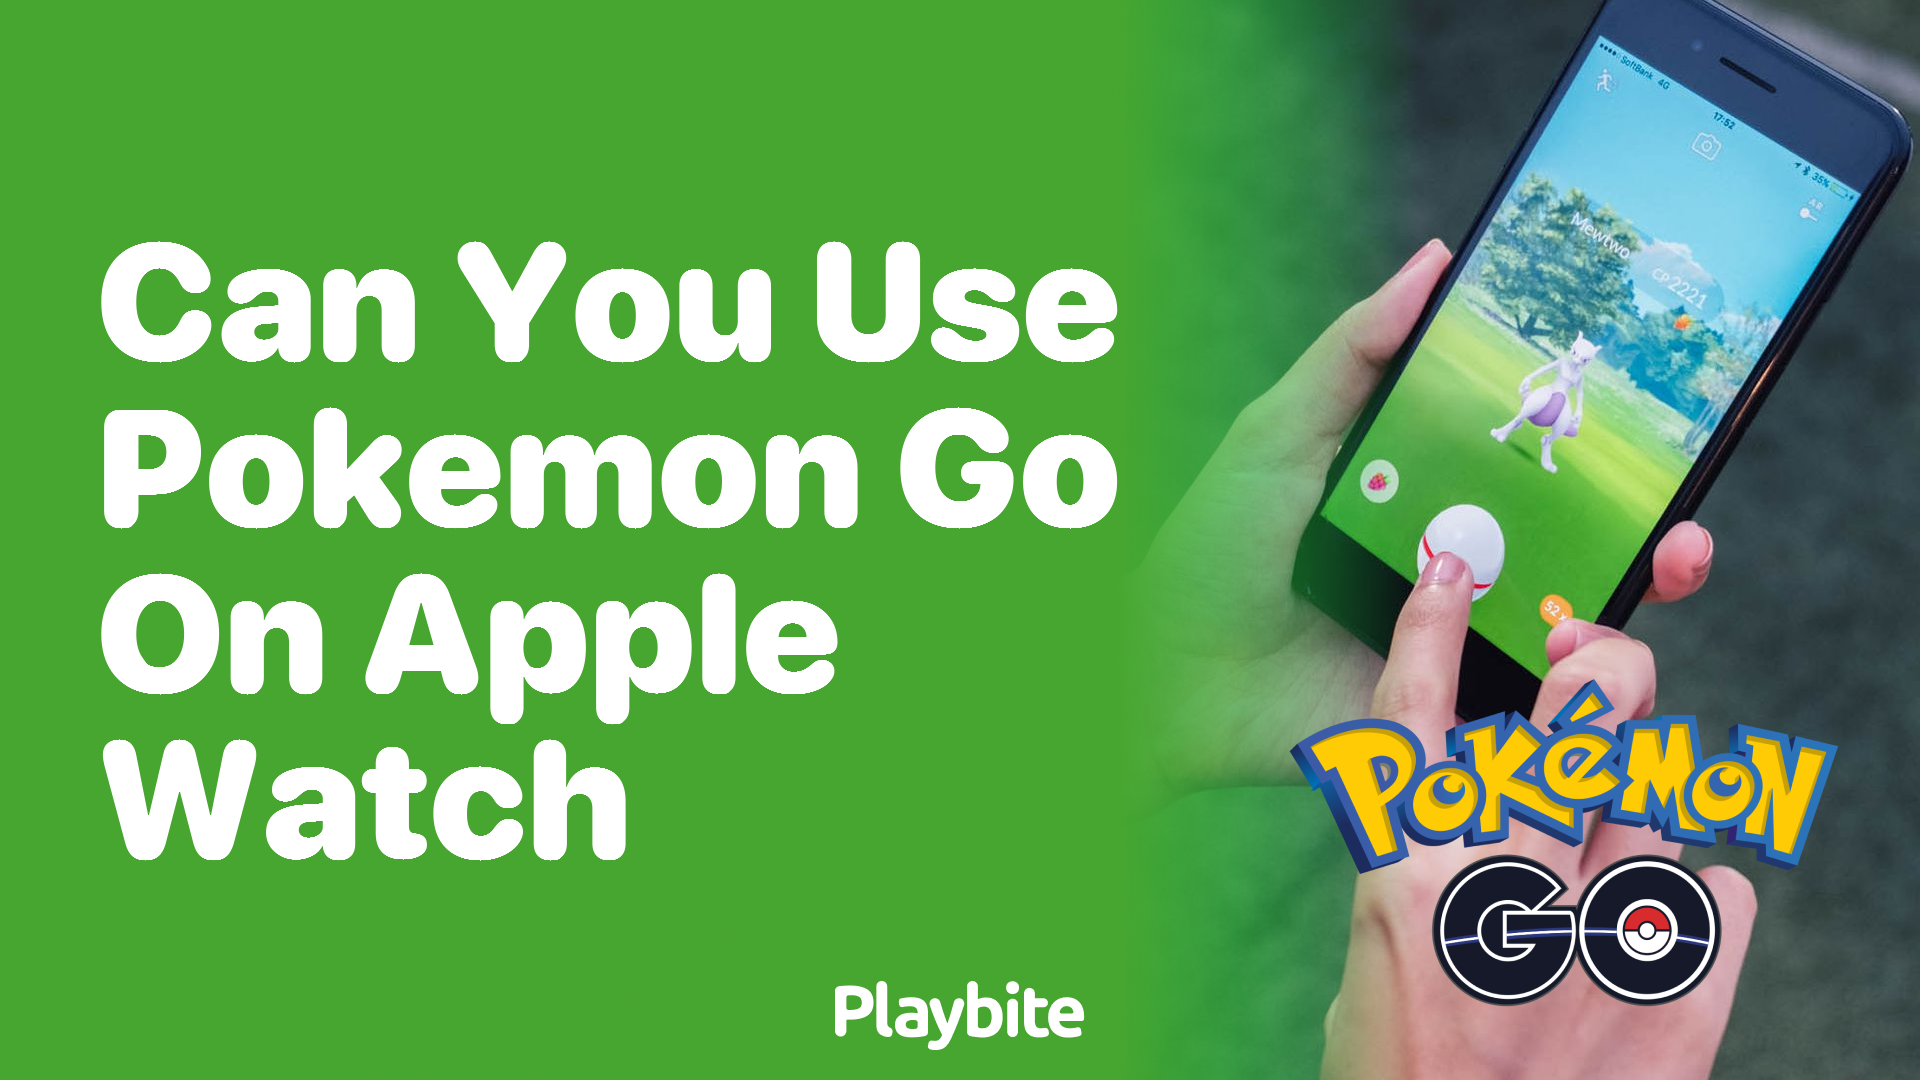 Can You Use Pokémon GO on Apple Watch?